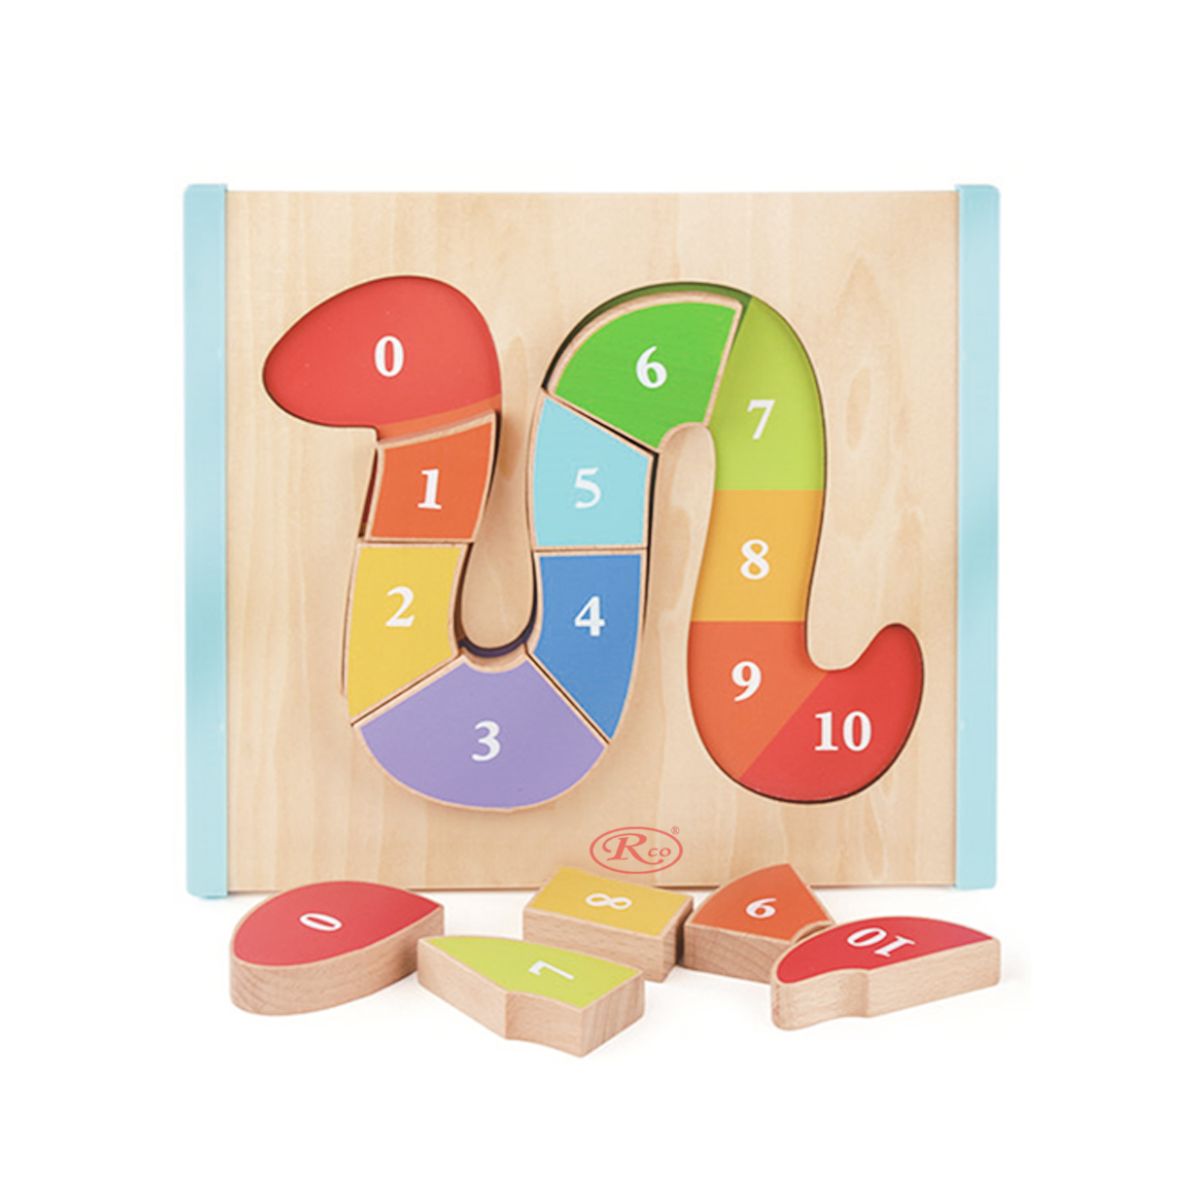 Jucarii interior - Puzzle 3D Montessori din lemn cu 10 piese, WD 2065, hectarul.ro